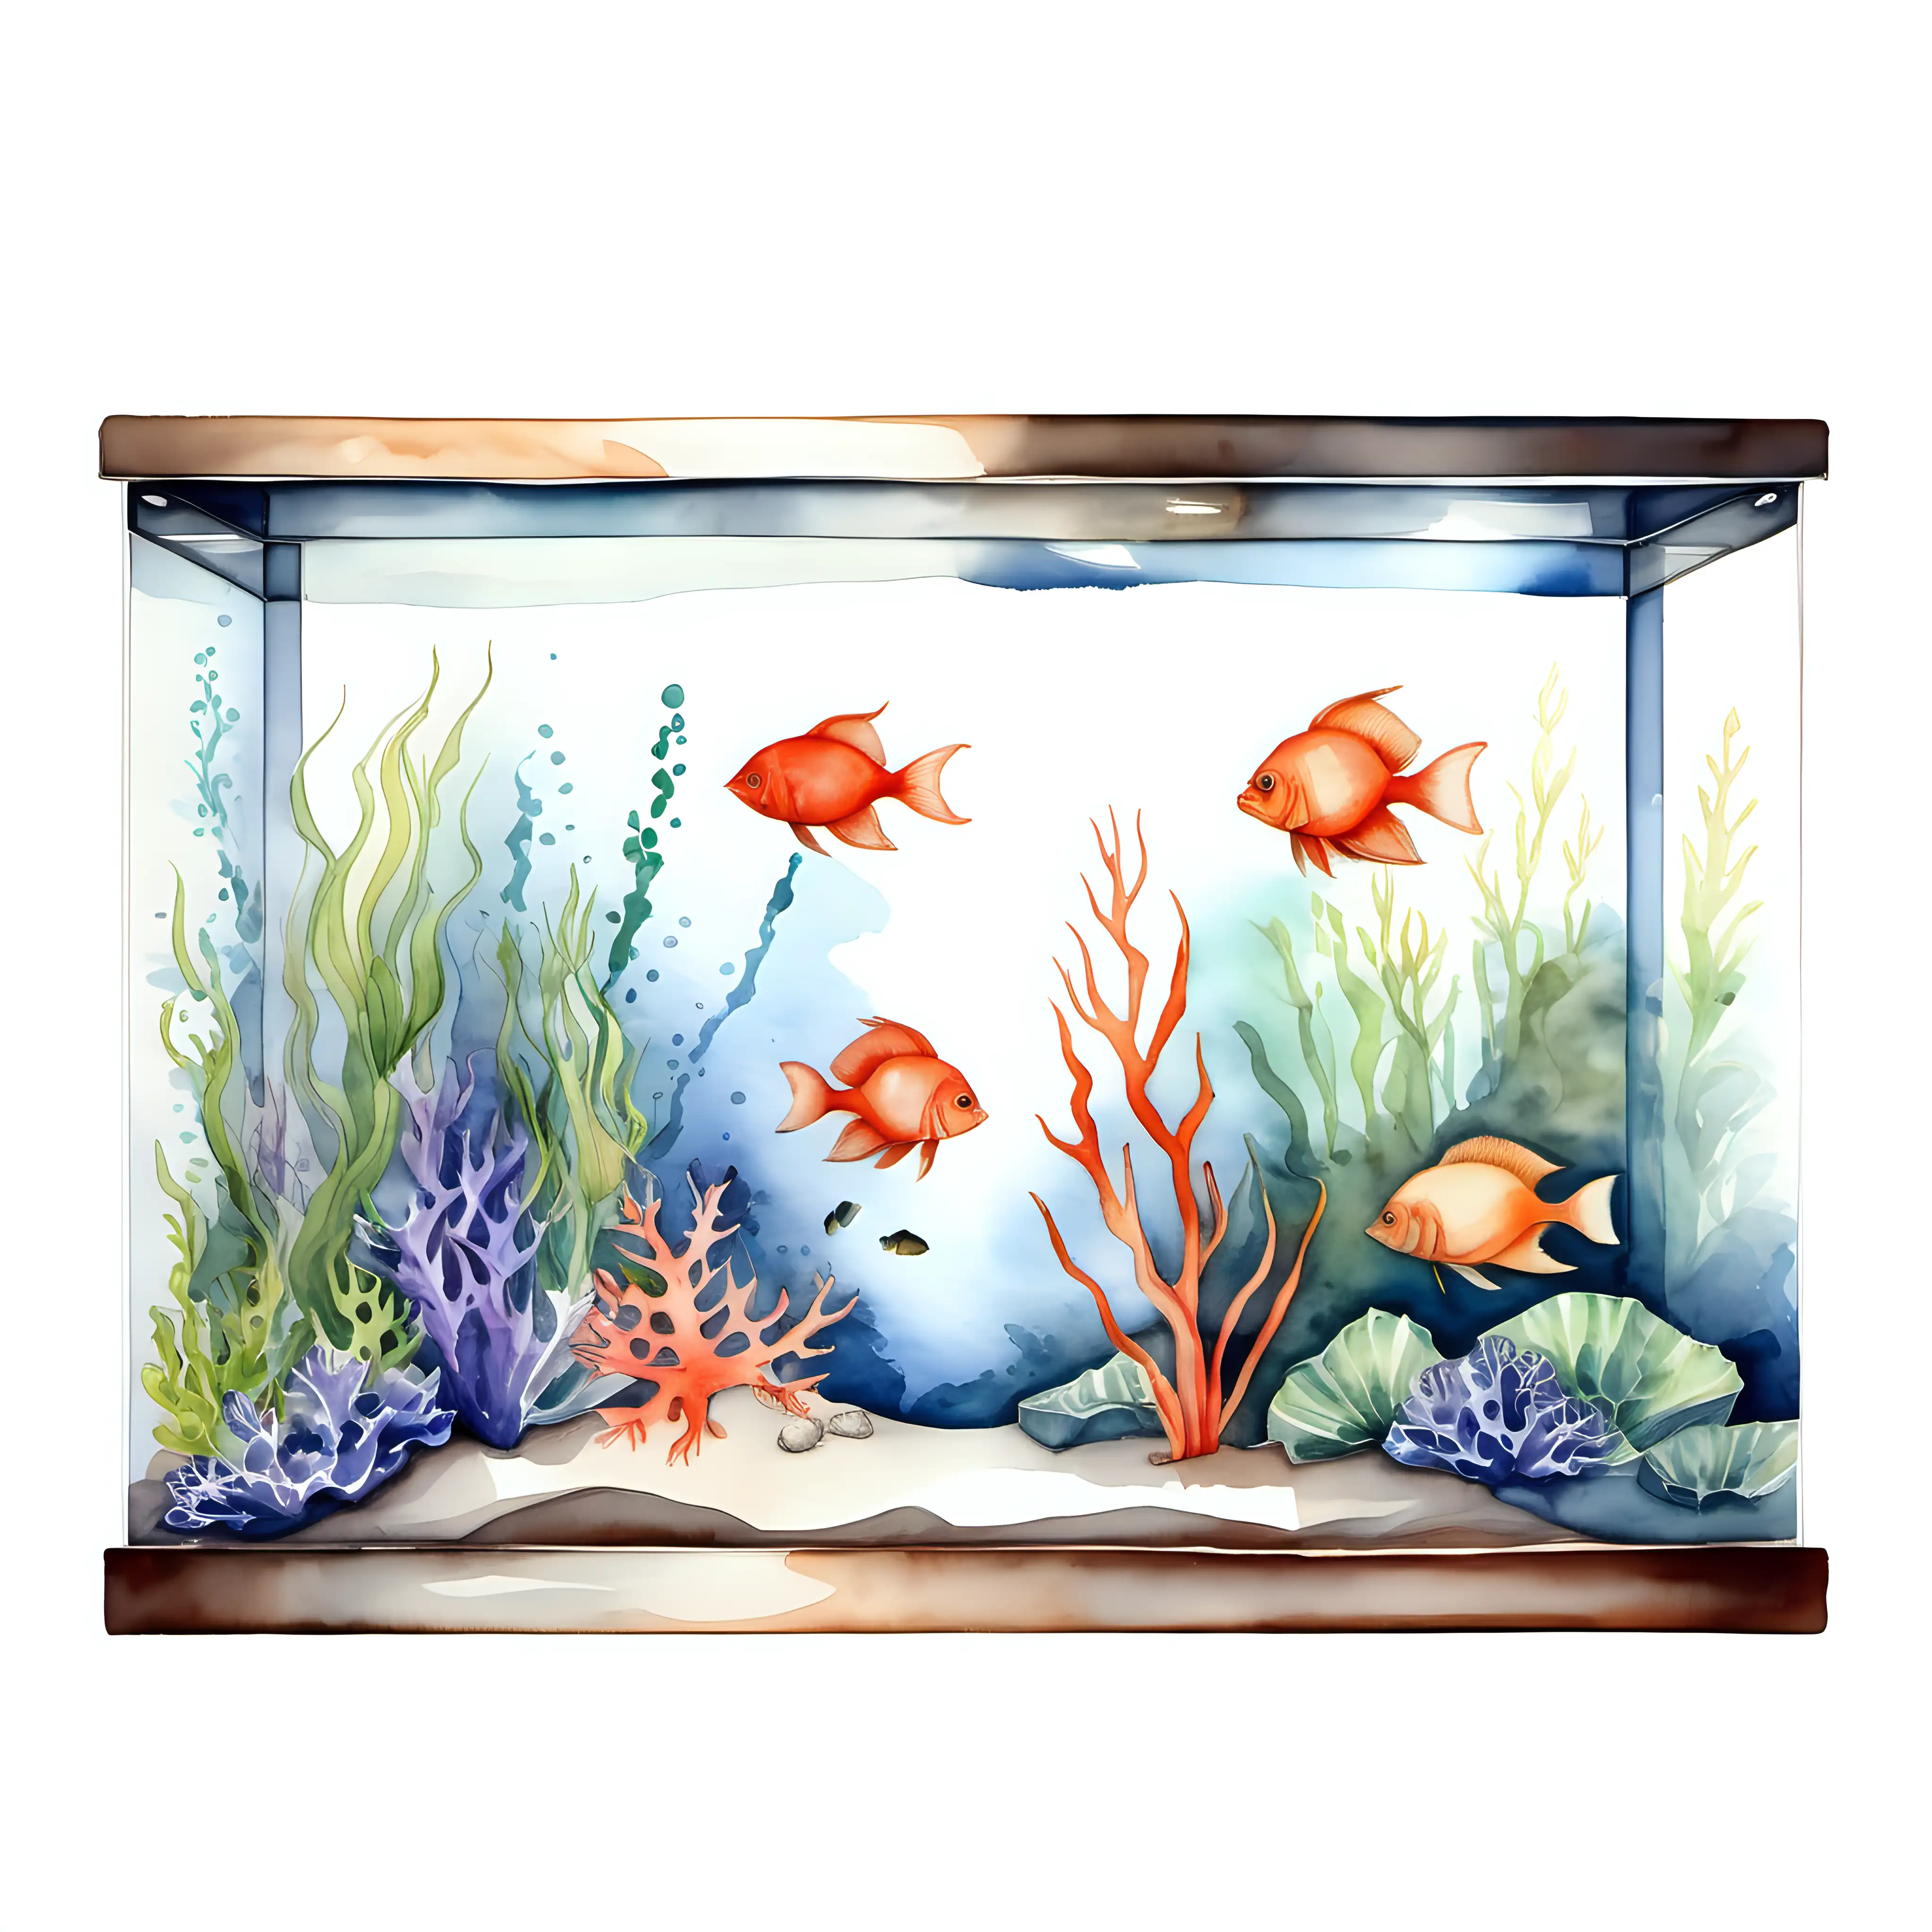 Colorful Aquarium Fish Swimming Against Clean White Background Vibrant Watercolor Art